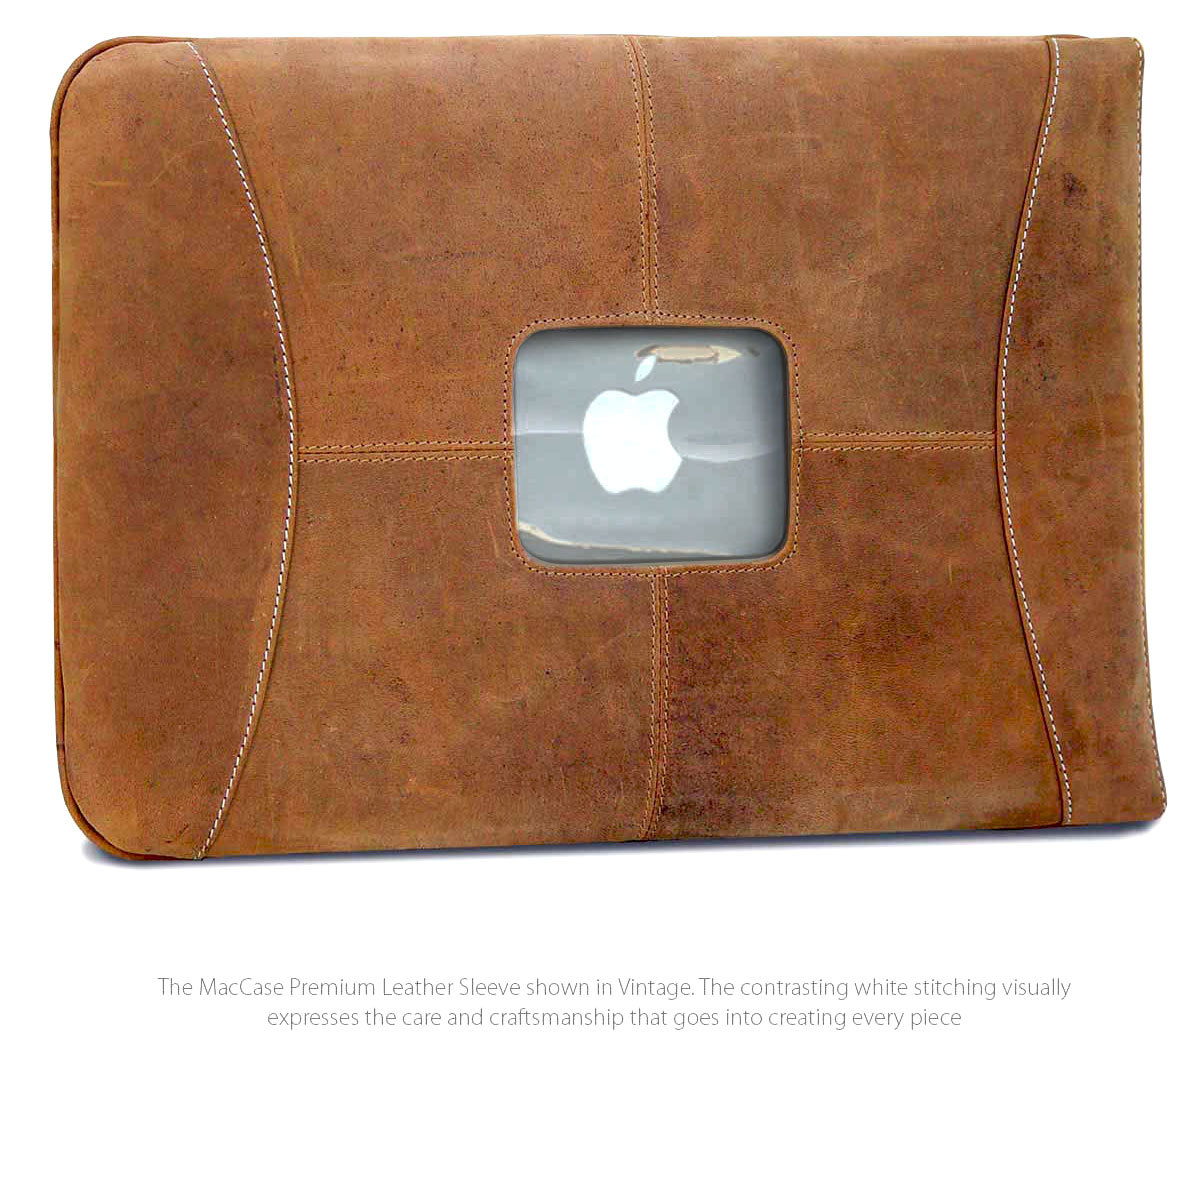 MacCase Premium Leather 15" MacBook Pro Sleeve - $129.95